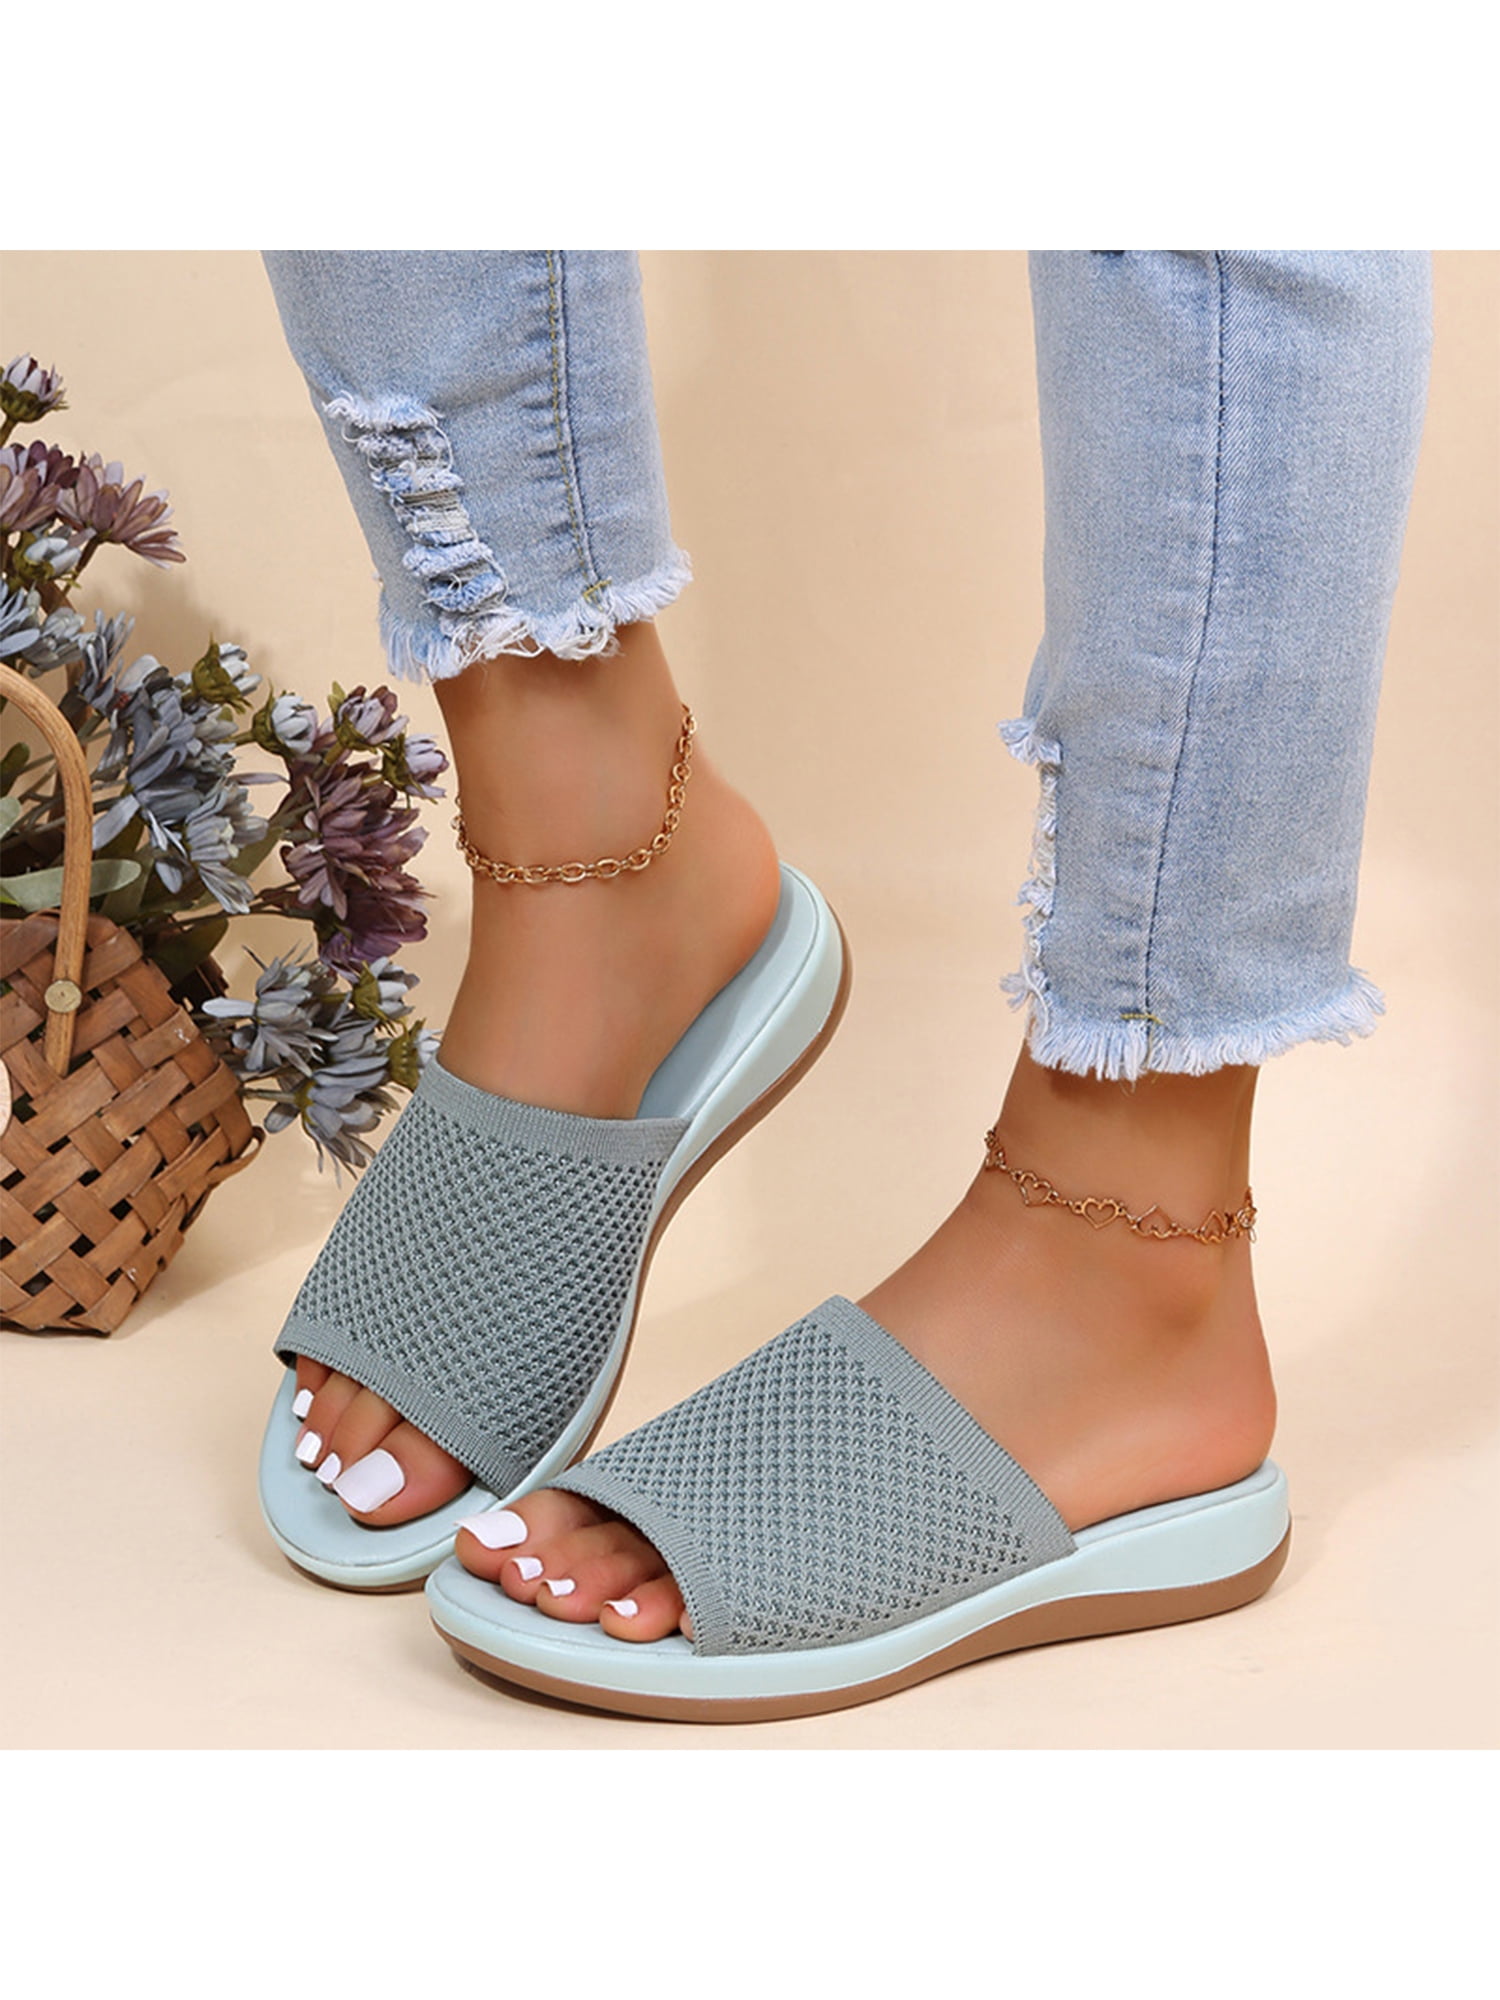 LUXUR Wide Width Sandals Womens Fashion Orthotic Slides Ladies